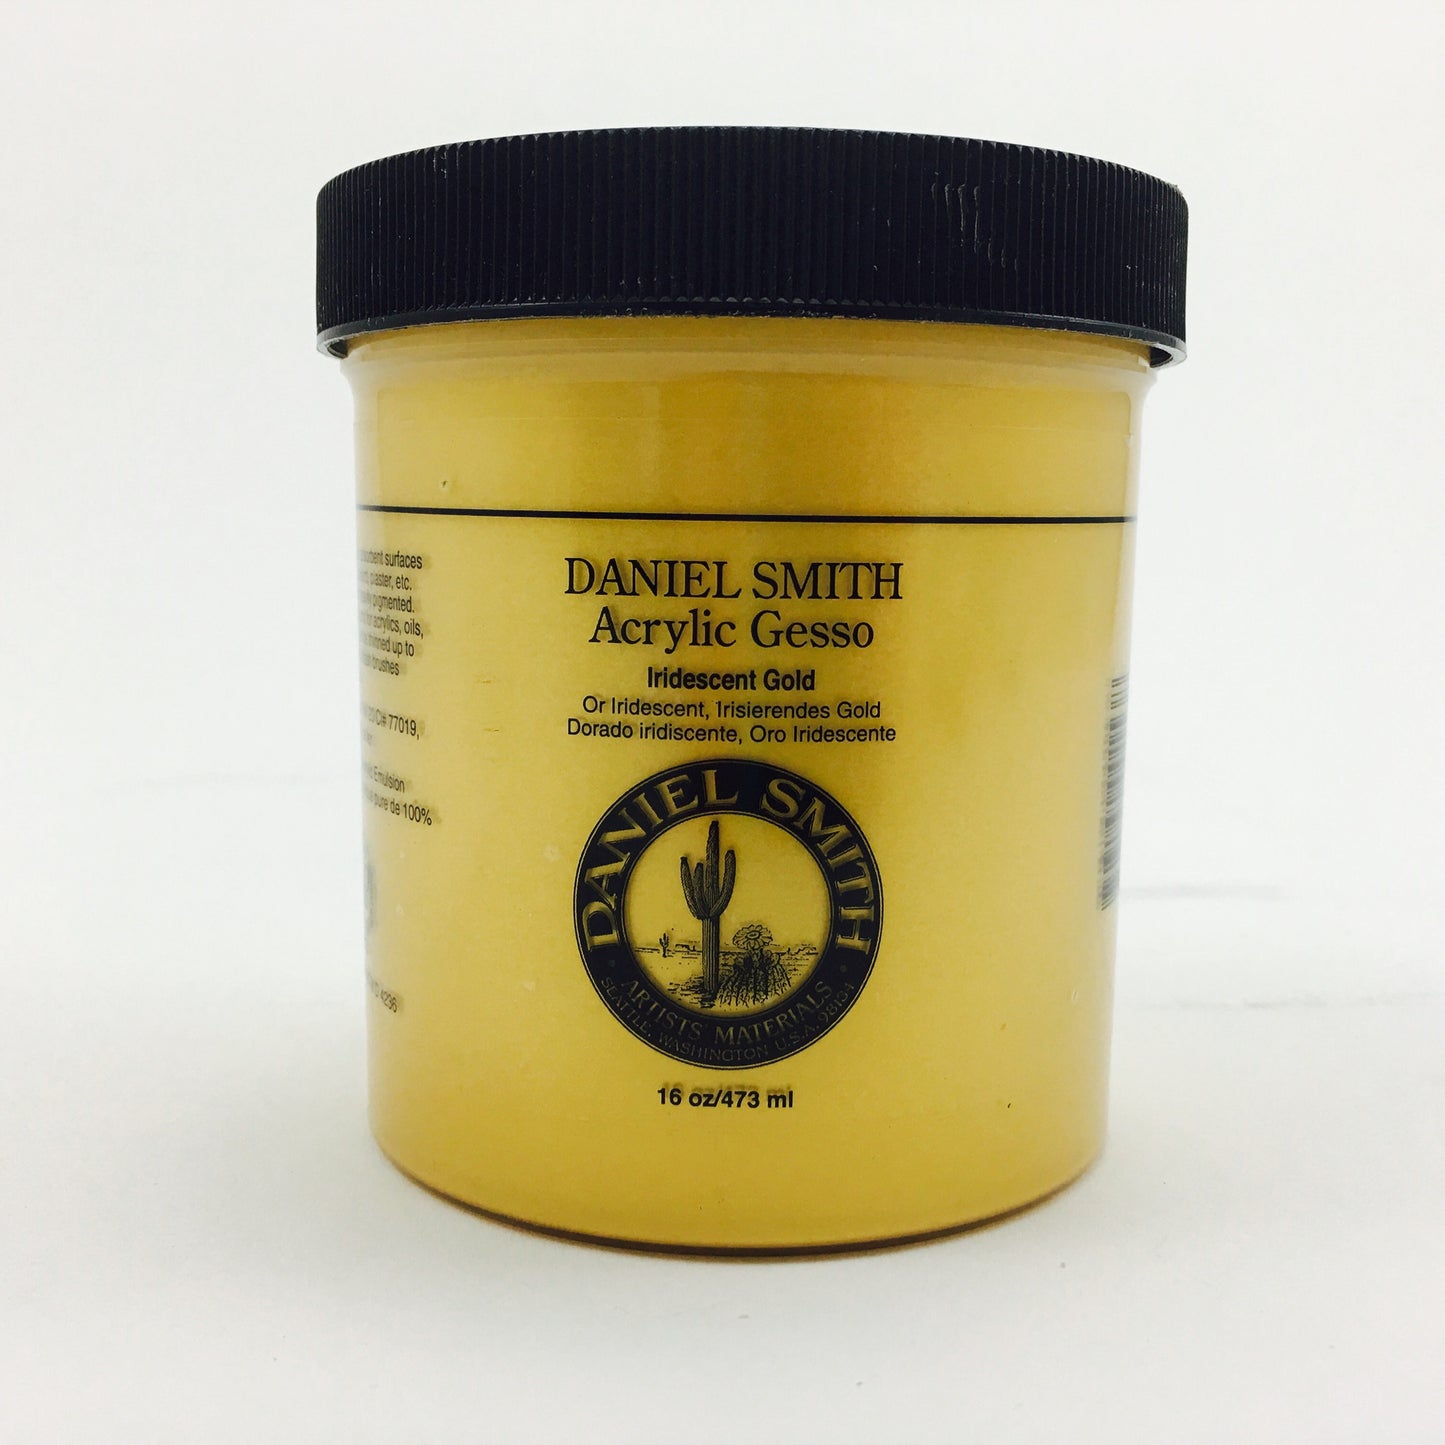 Daniel Smith Acrylic Gesso - 16 oz. - Iridescent Gold - by Daniel Smith - K. A. Artist Shop